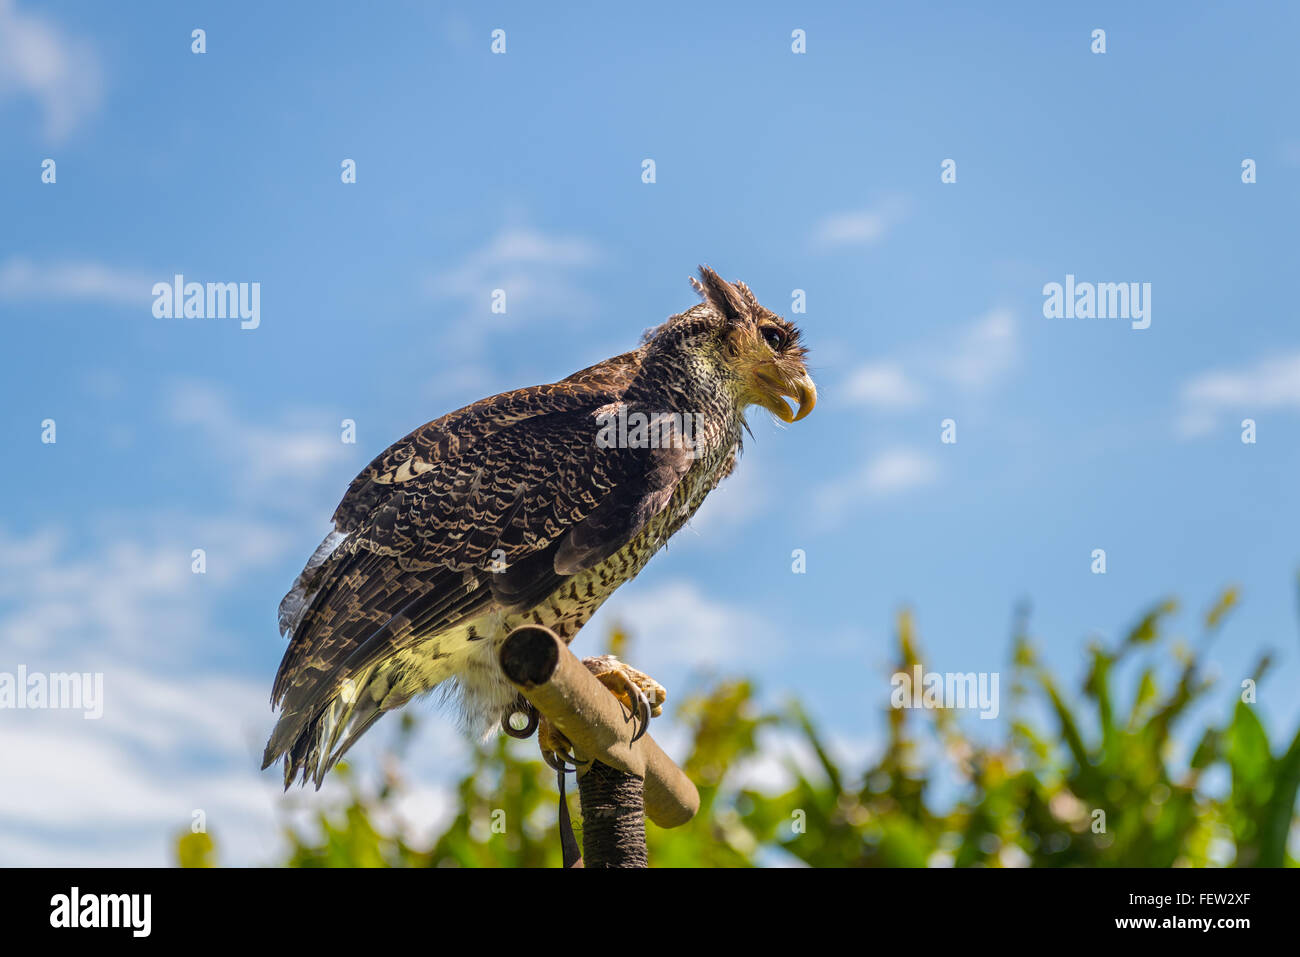 The falcon at Bali Birds Park. Indonesia Stock Photo